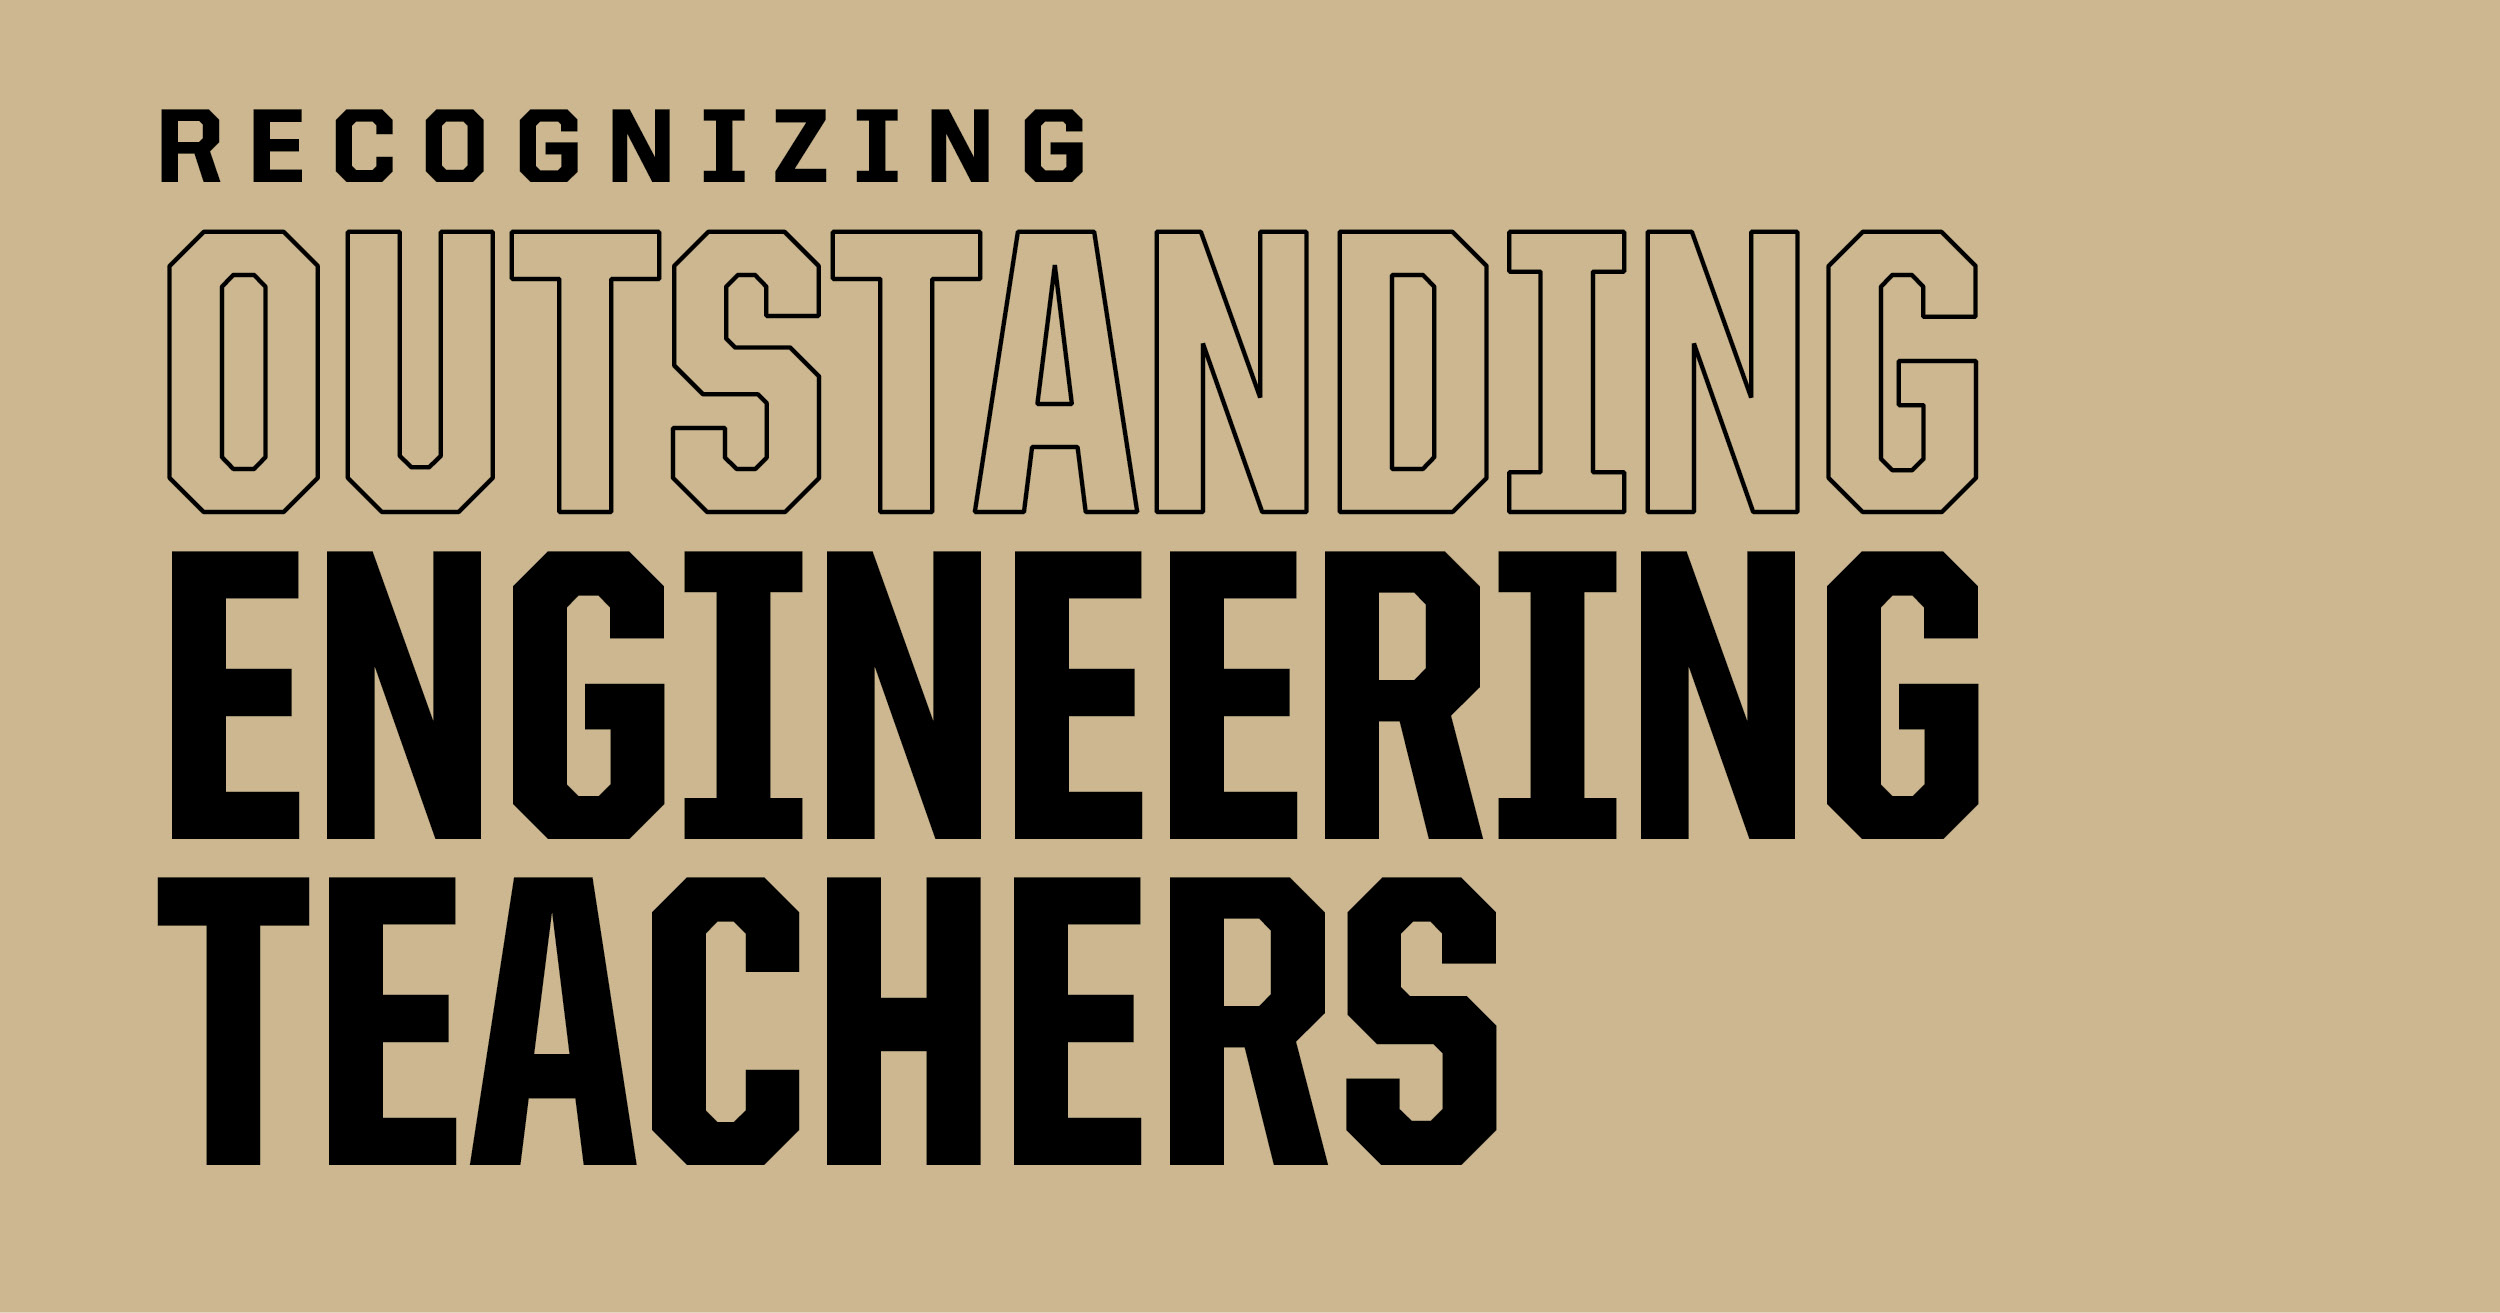 Recognizing Engineering Teachers